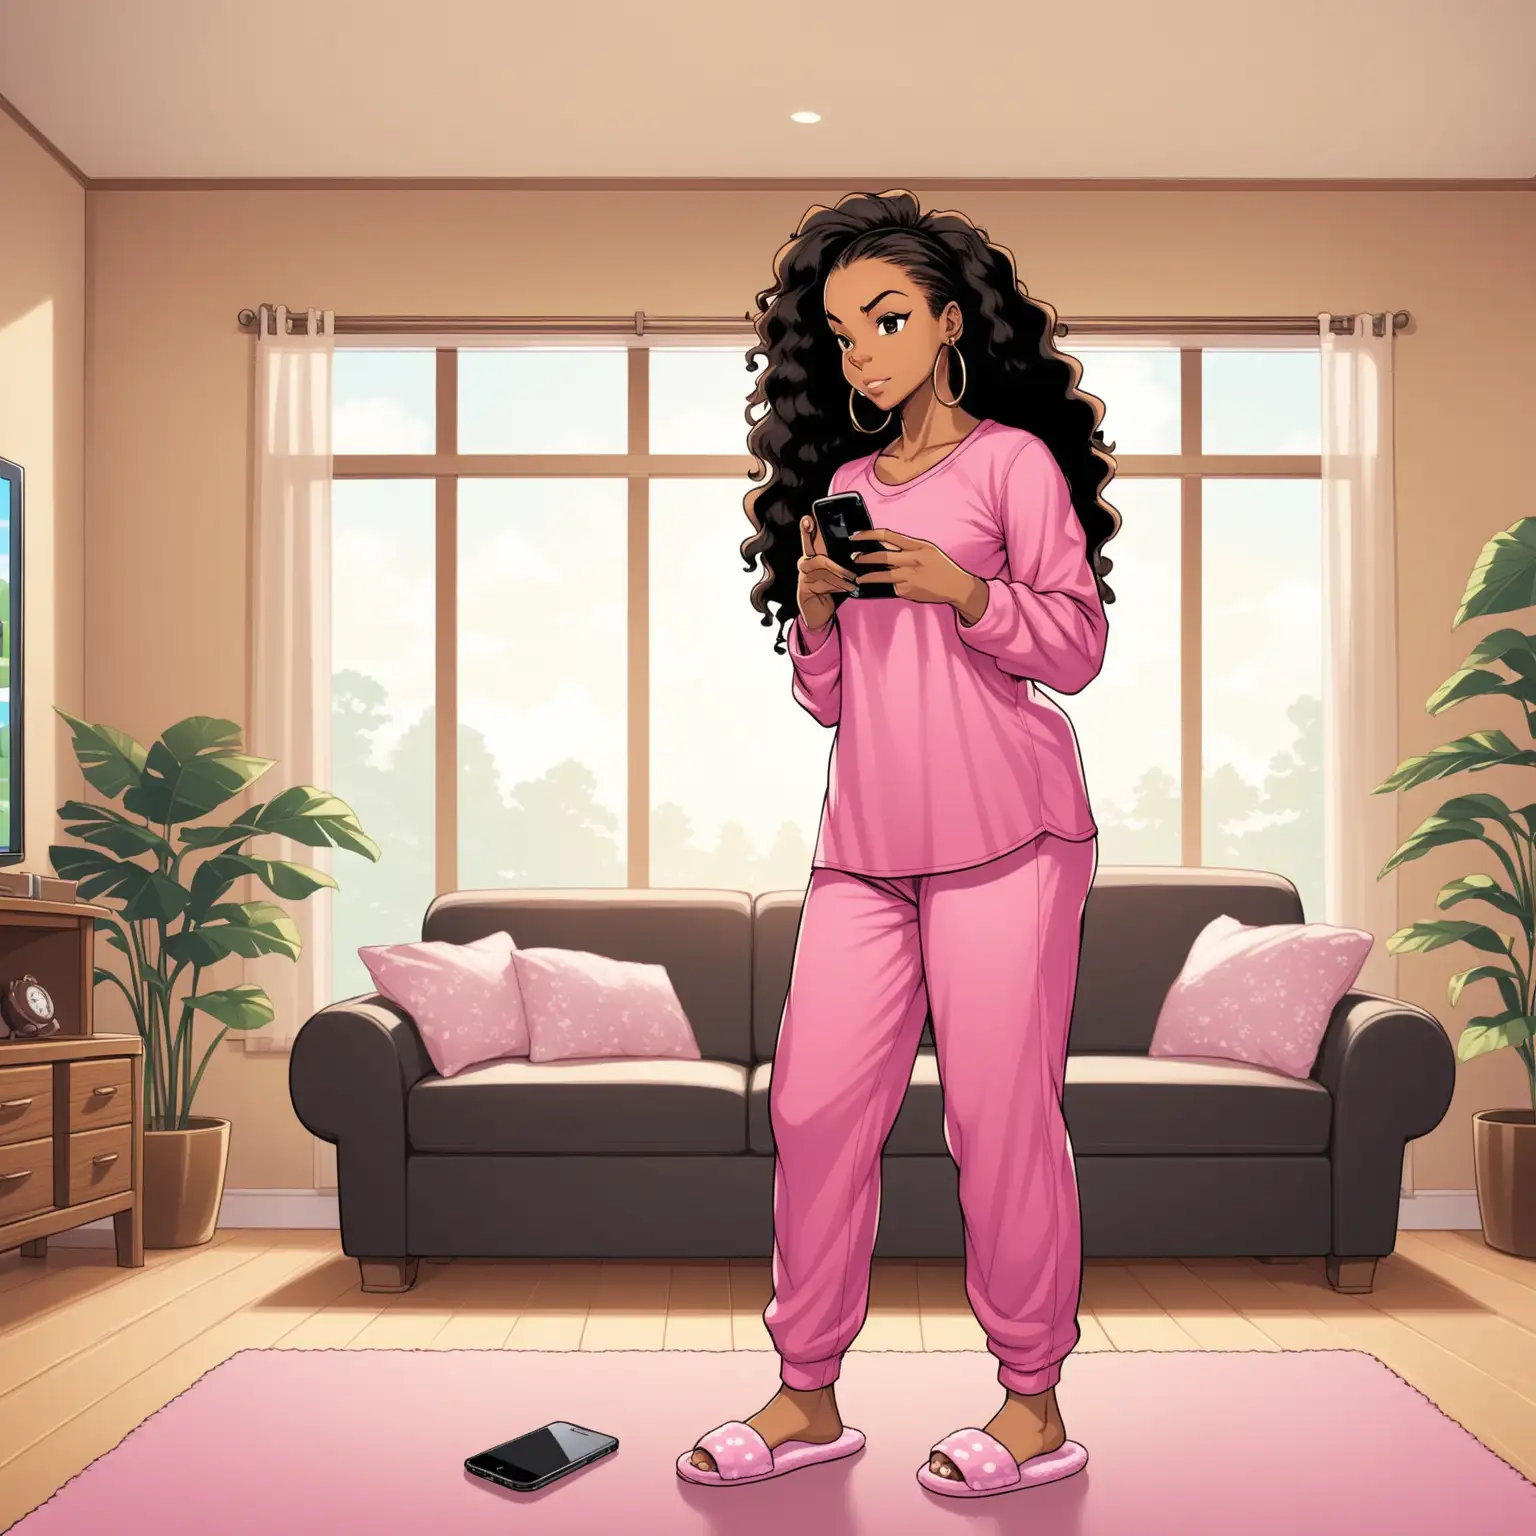 African American Woman in Pink Pajamas Checking Phone in Boondocks Cartoon Style